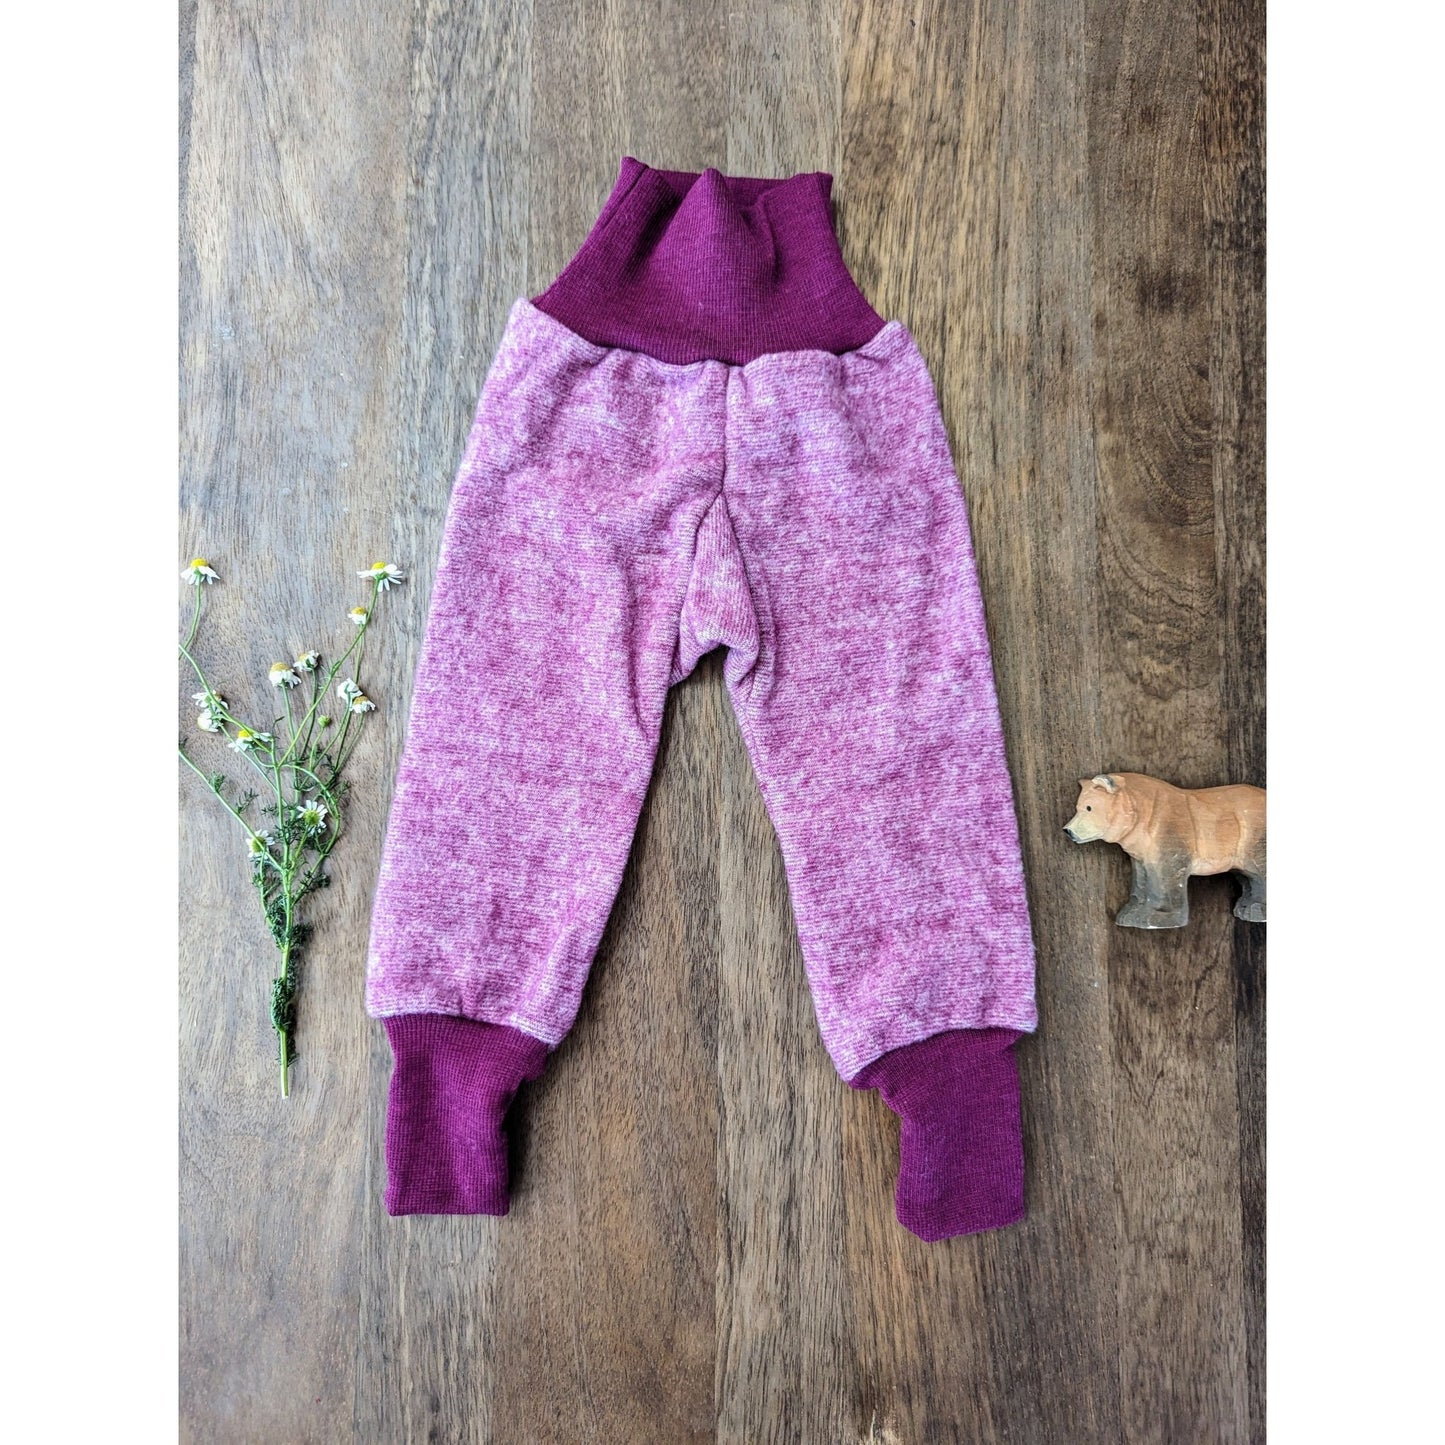 Cosilana Organic Wool and Cotton Fleece Baby Pants (3mo - 3 years) - Nature's Wild Child